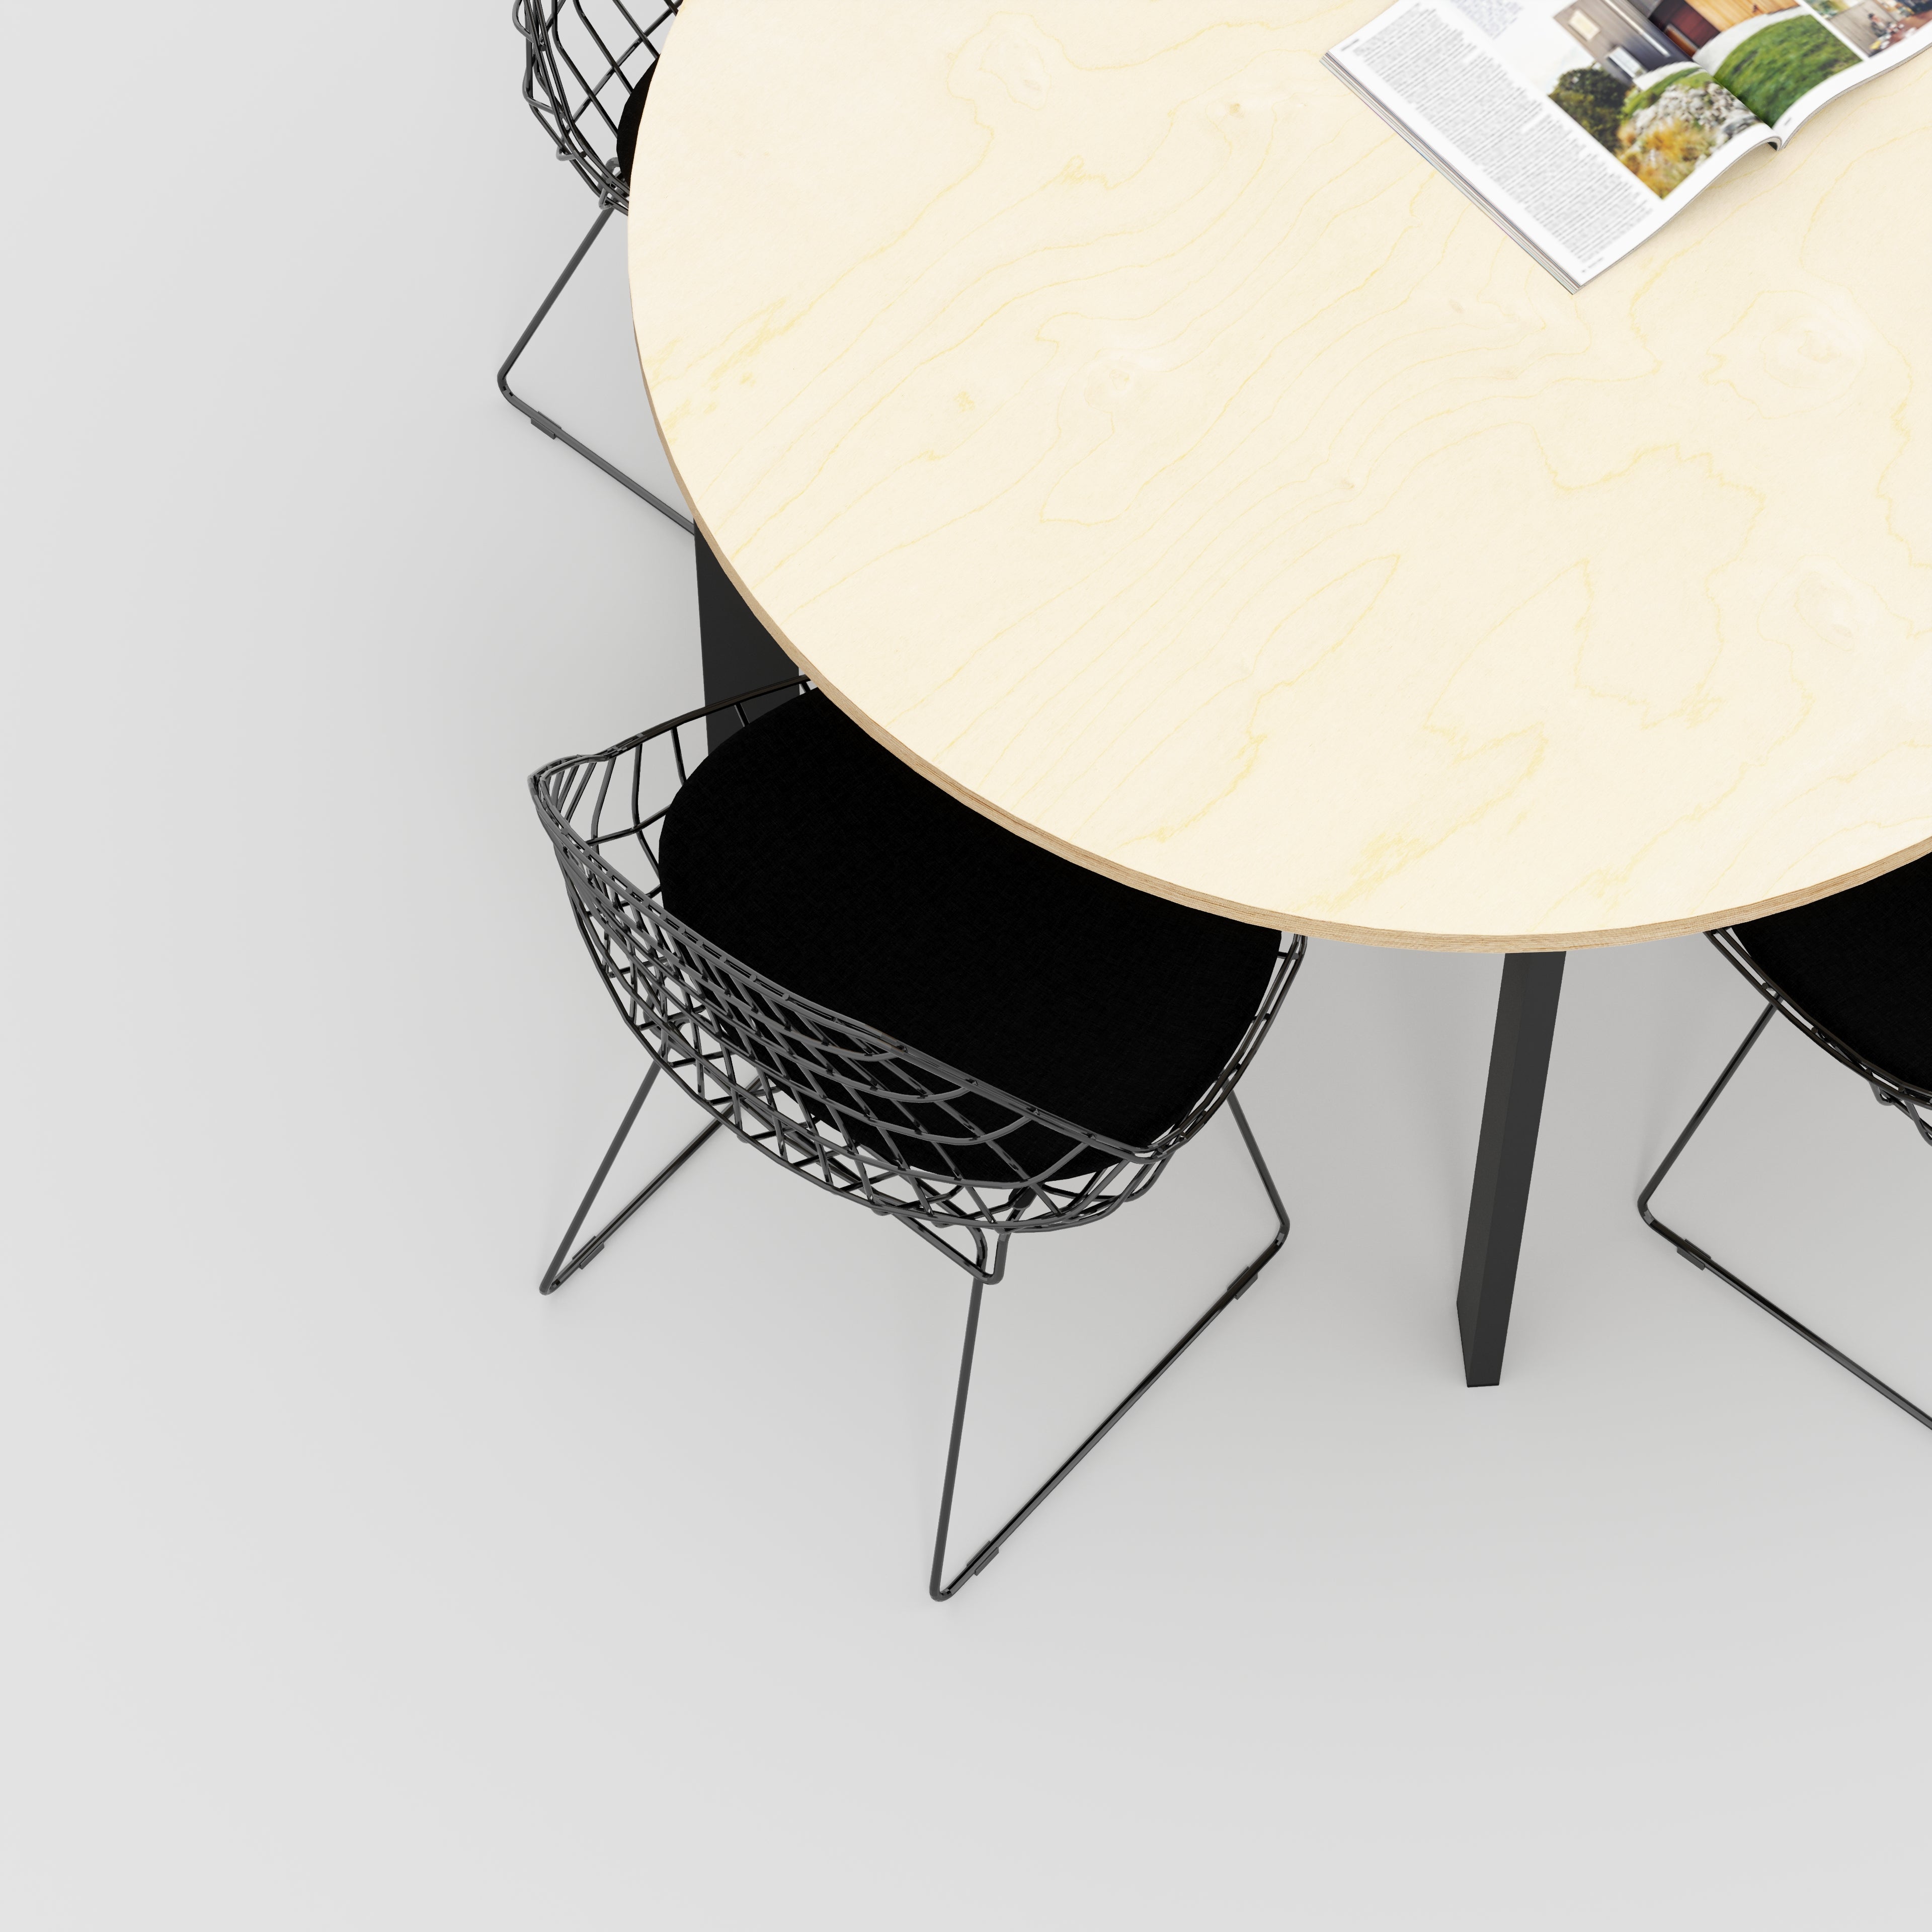 Custom Plywood Round Table with Rectangular Single Pin Legs